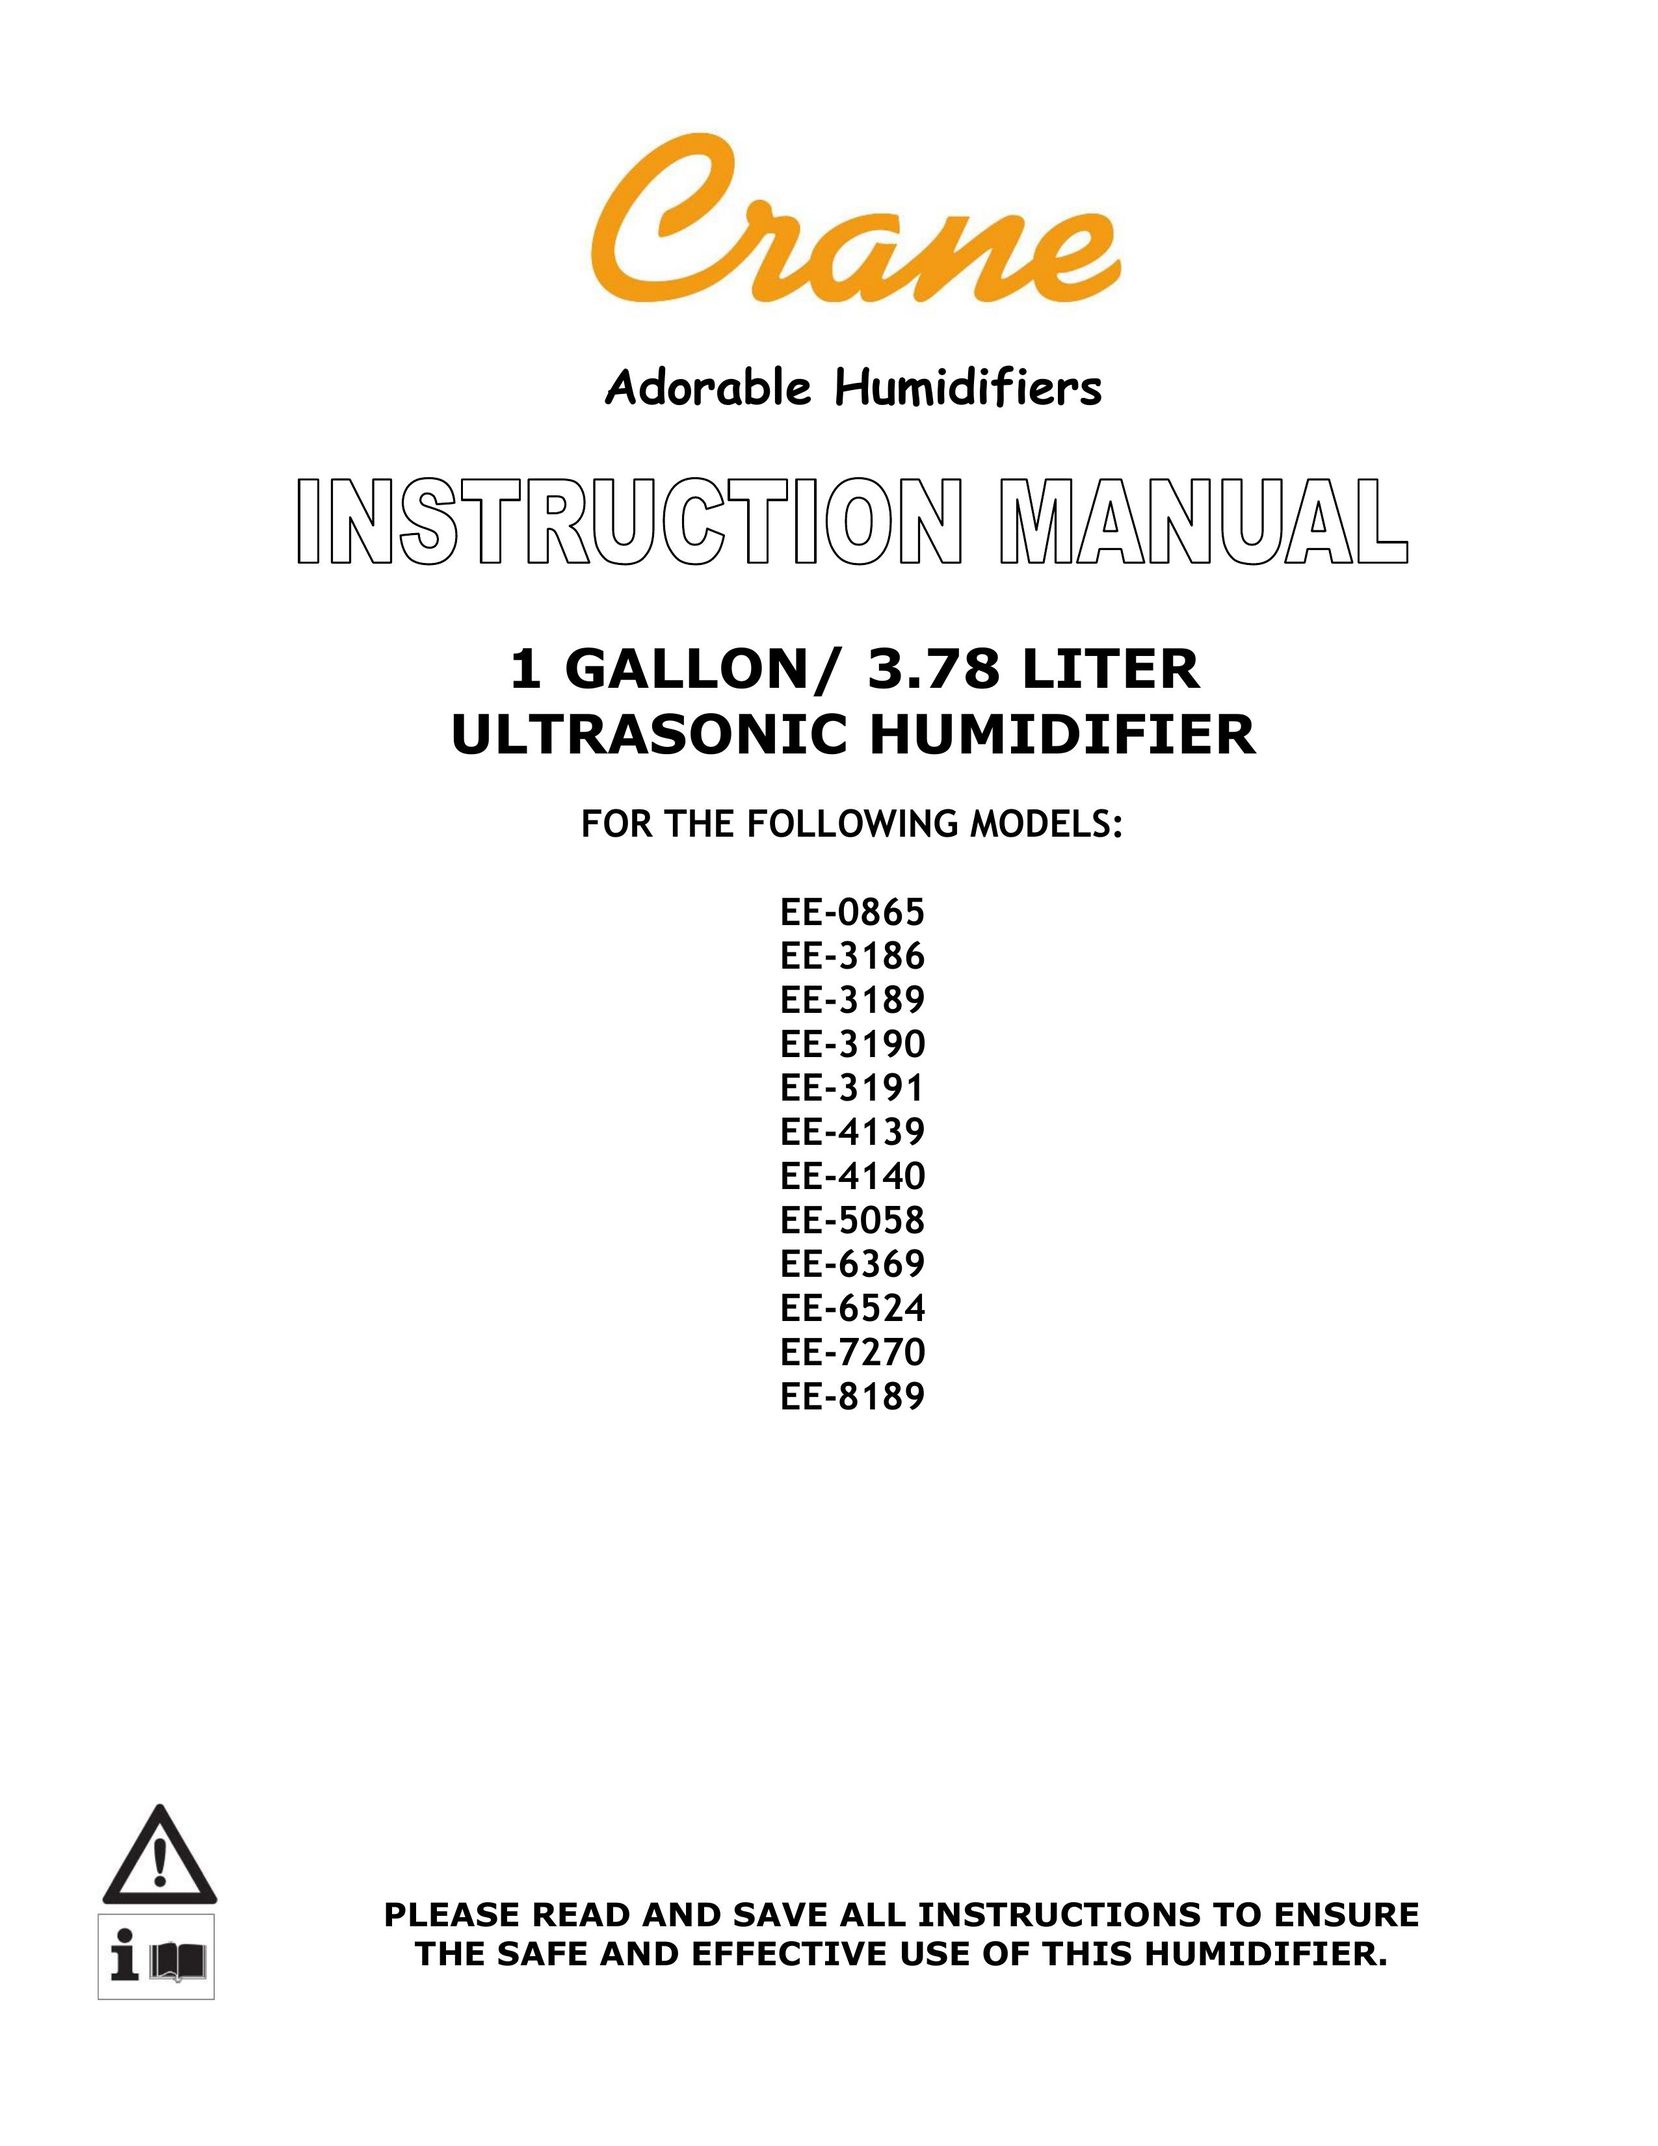 Crane EE-7270 Humidifier User Manual